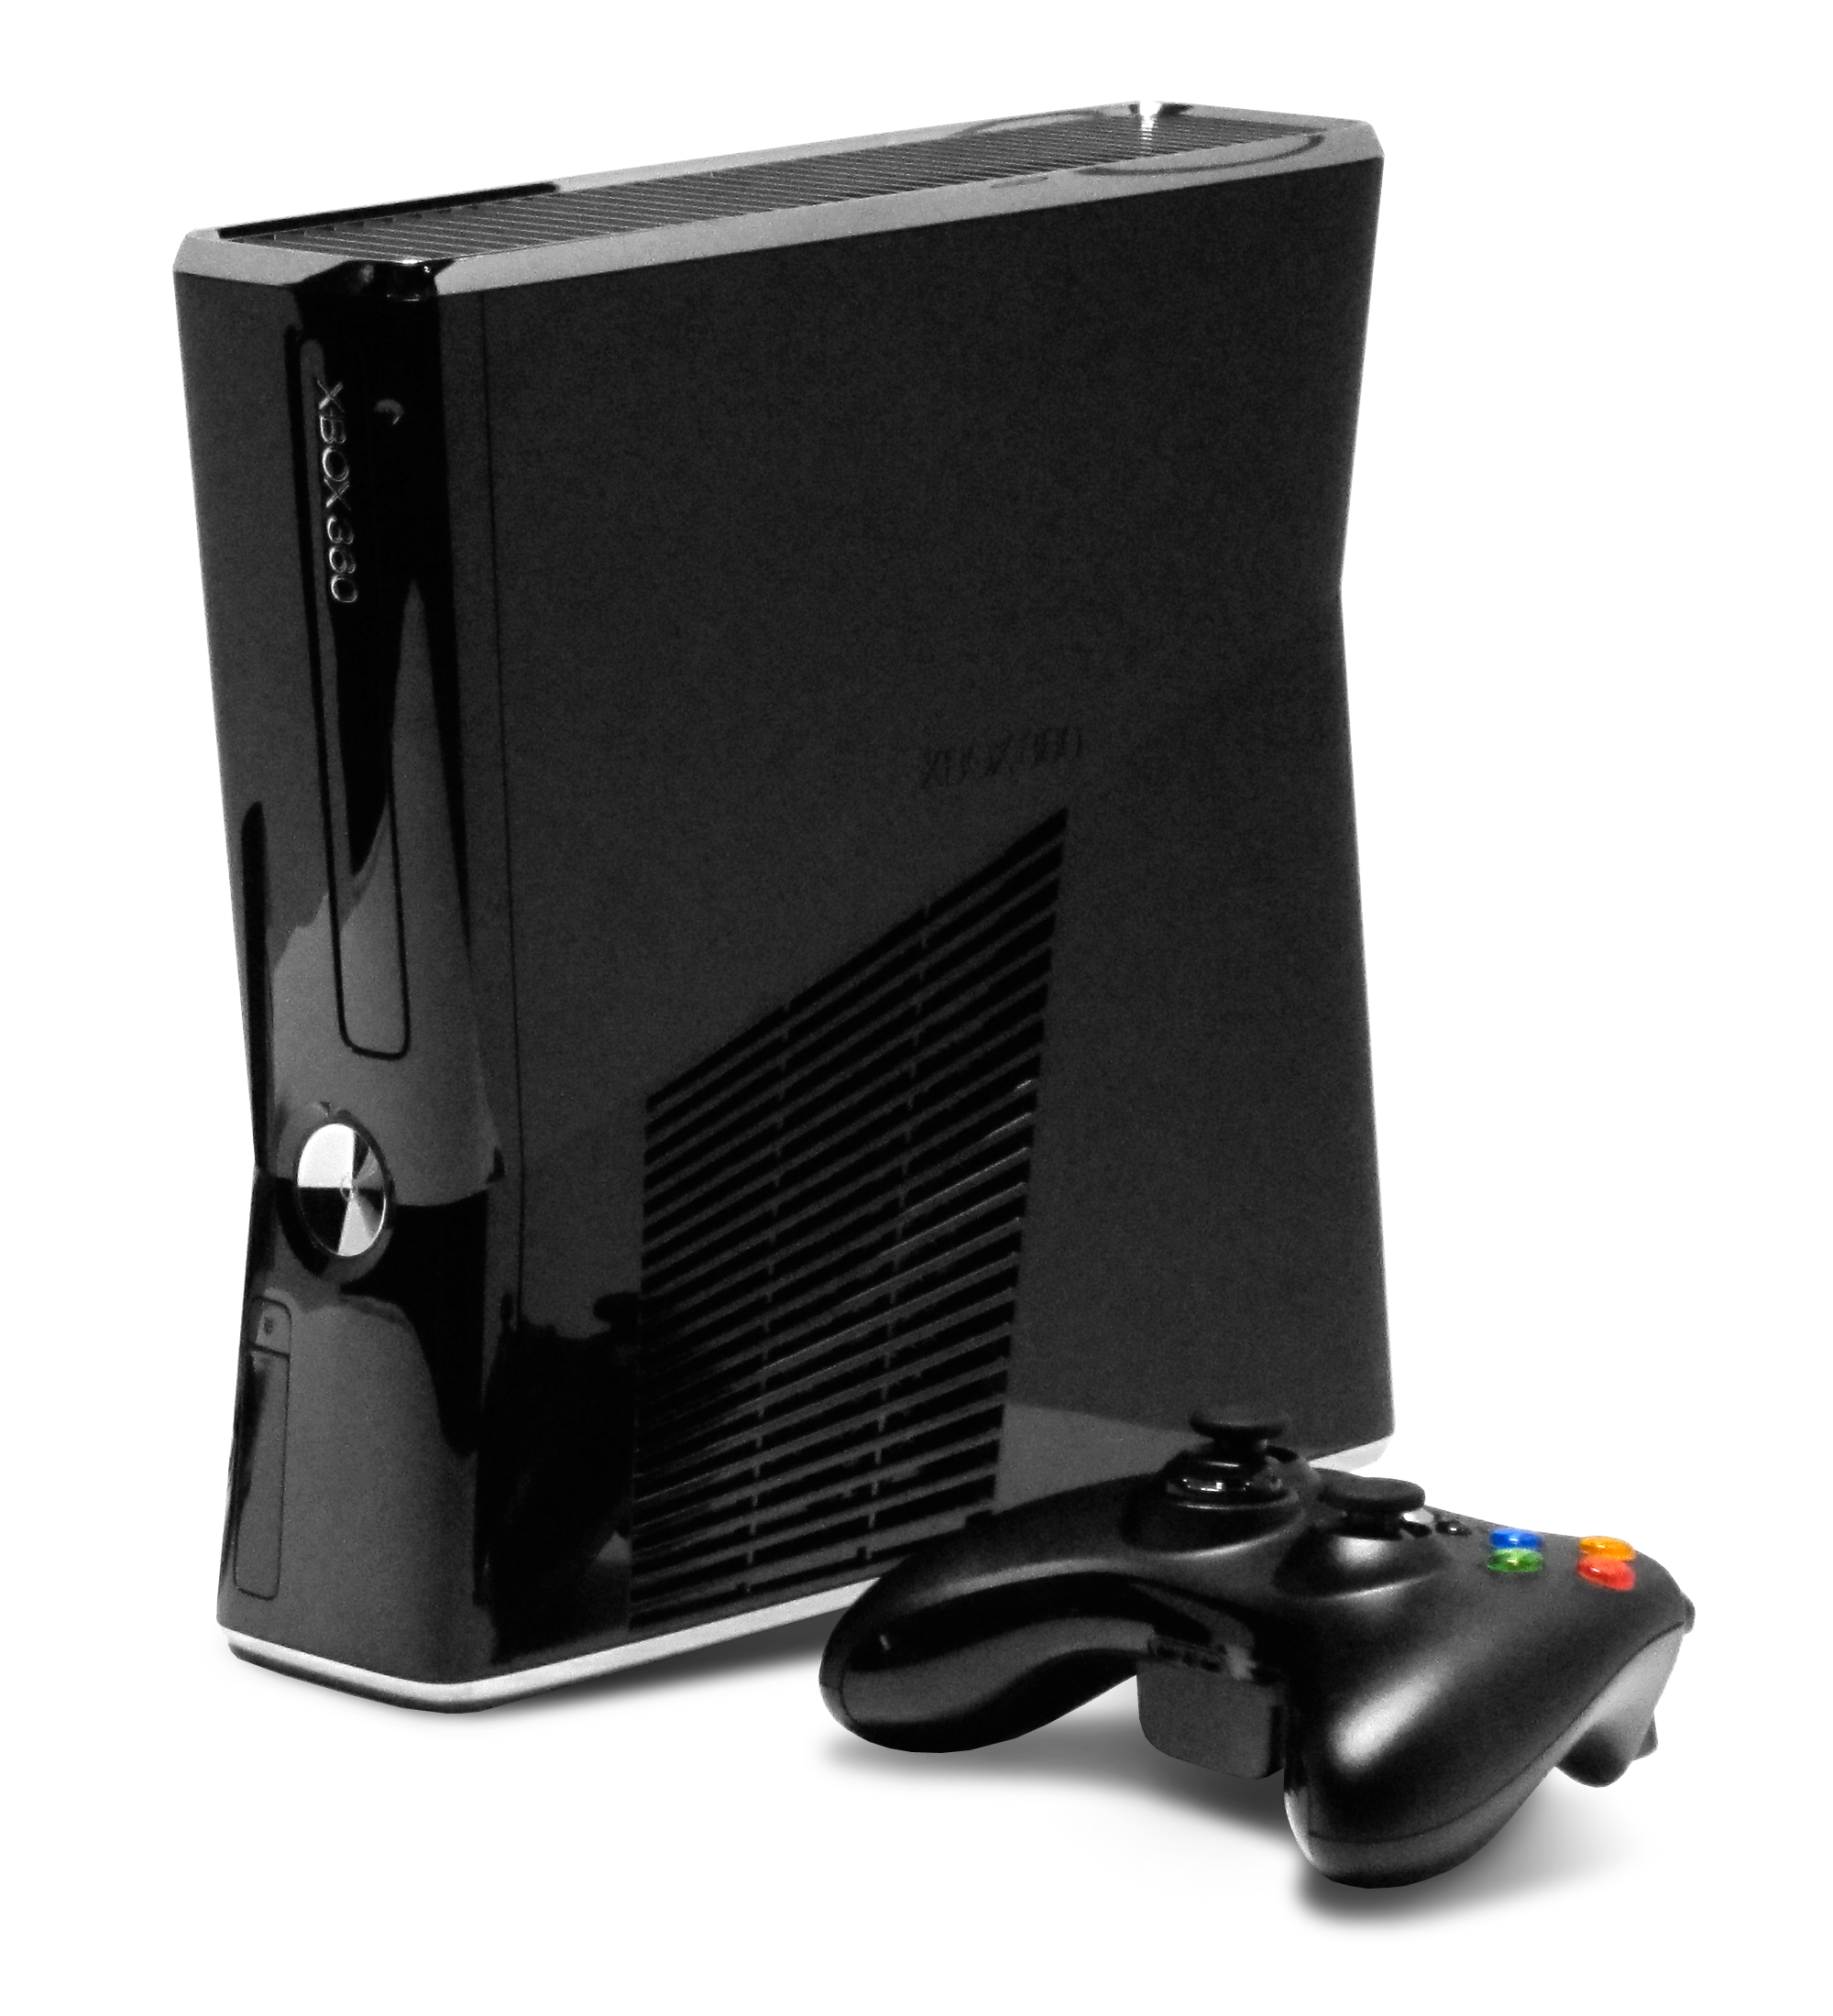 File:Xbox-360-S-Controller.pn